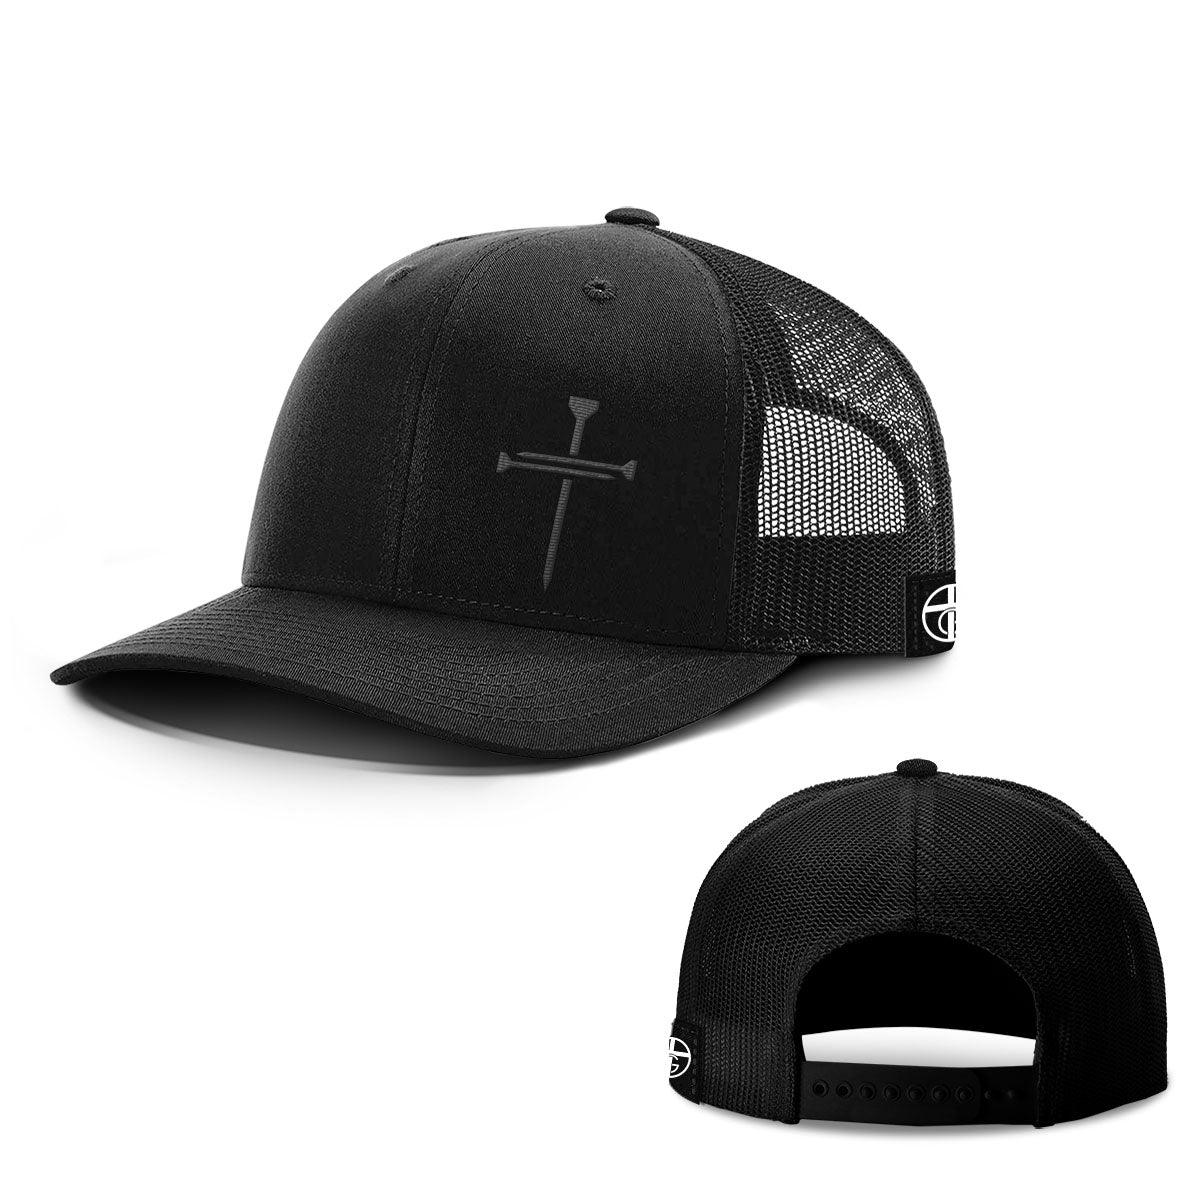 Nail Cross Lower Left Blackout Version Hats